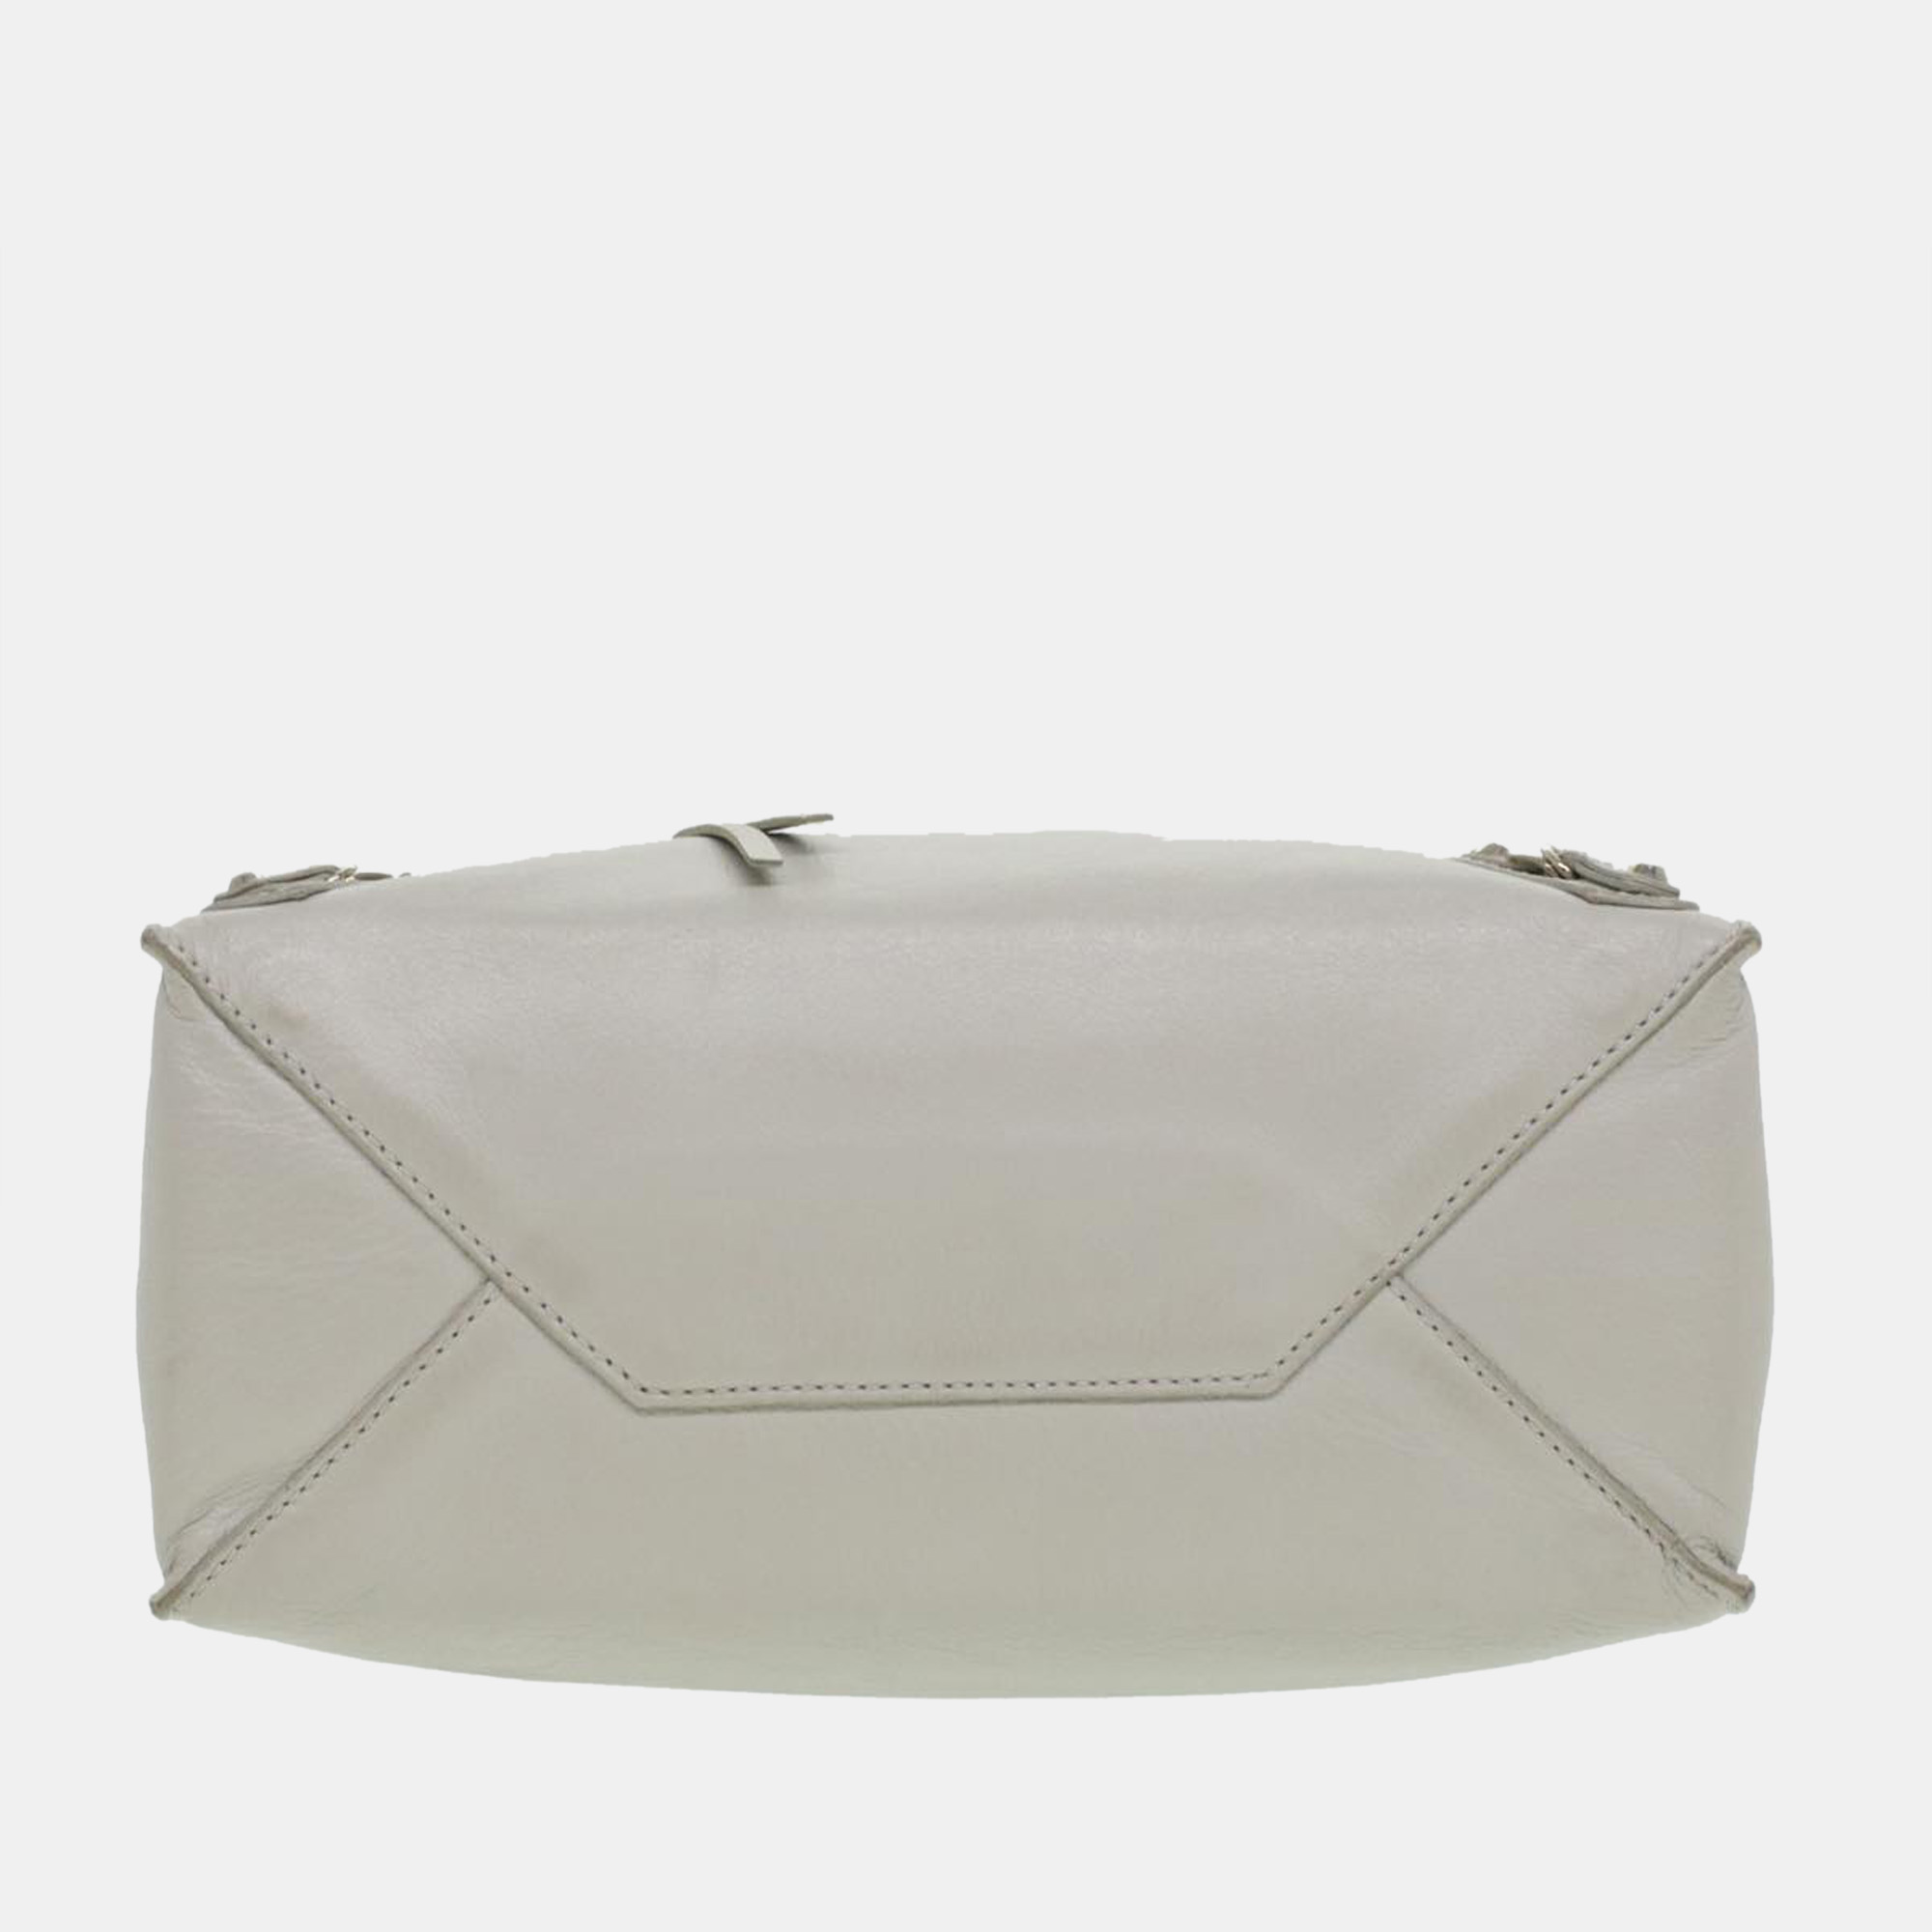 Balenciaga White Leather Mini Papier A4 Tote Bag